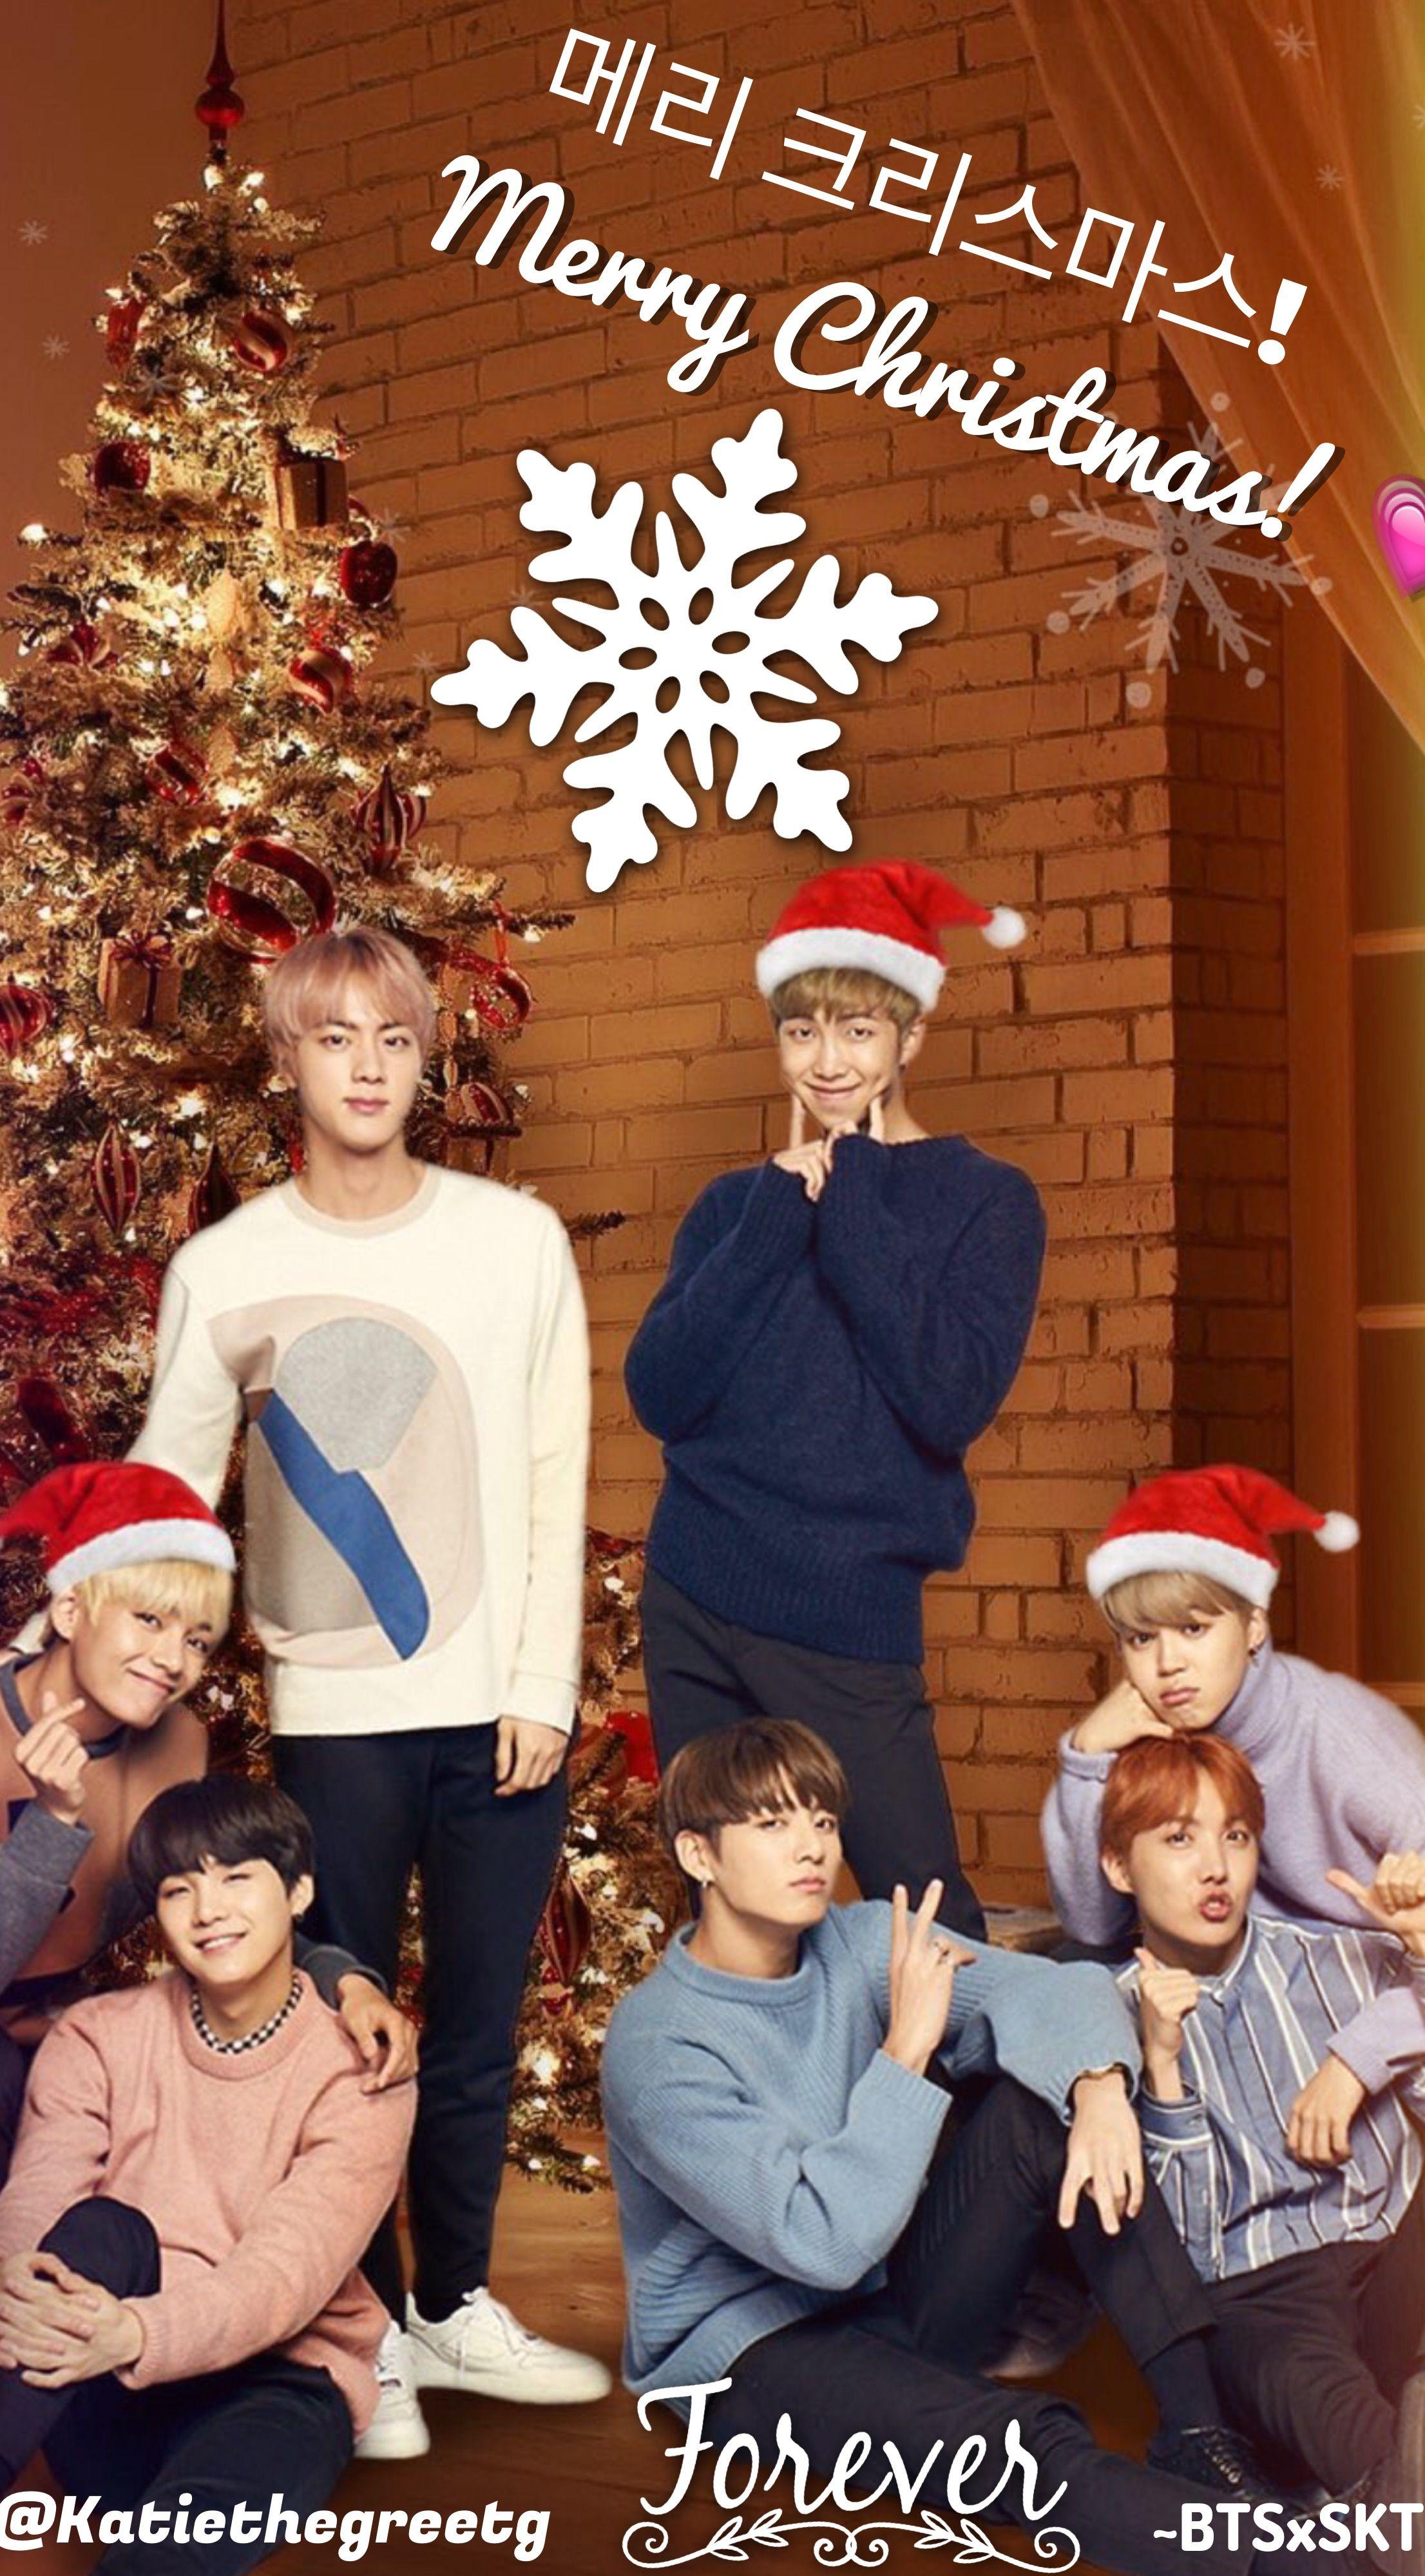 BTS wallpaper Christmas Bangtan boys 방탄소년단. Bts